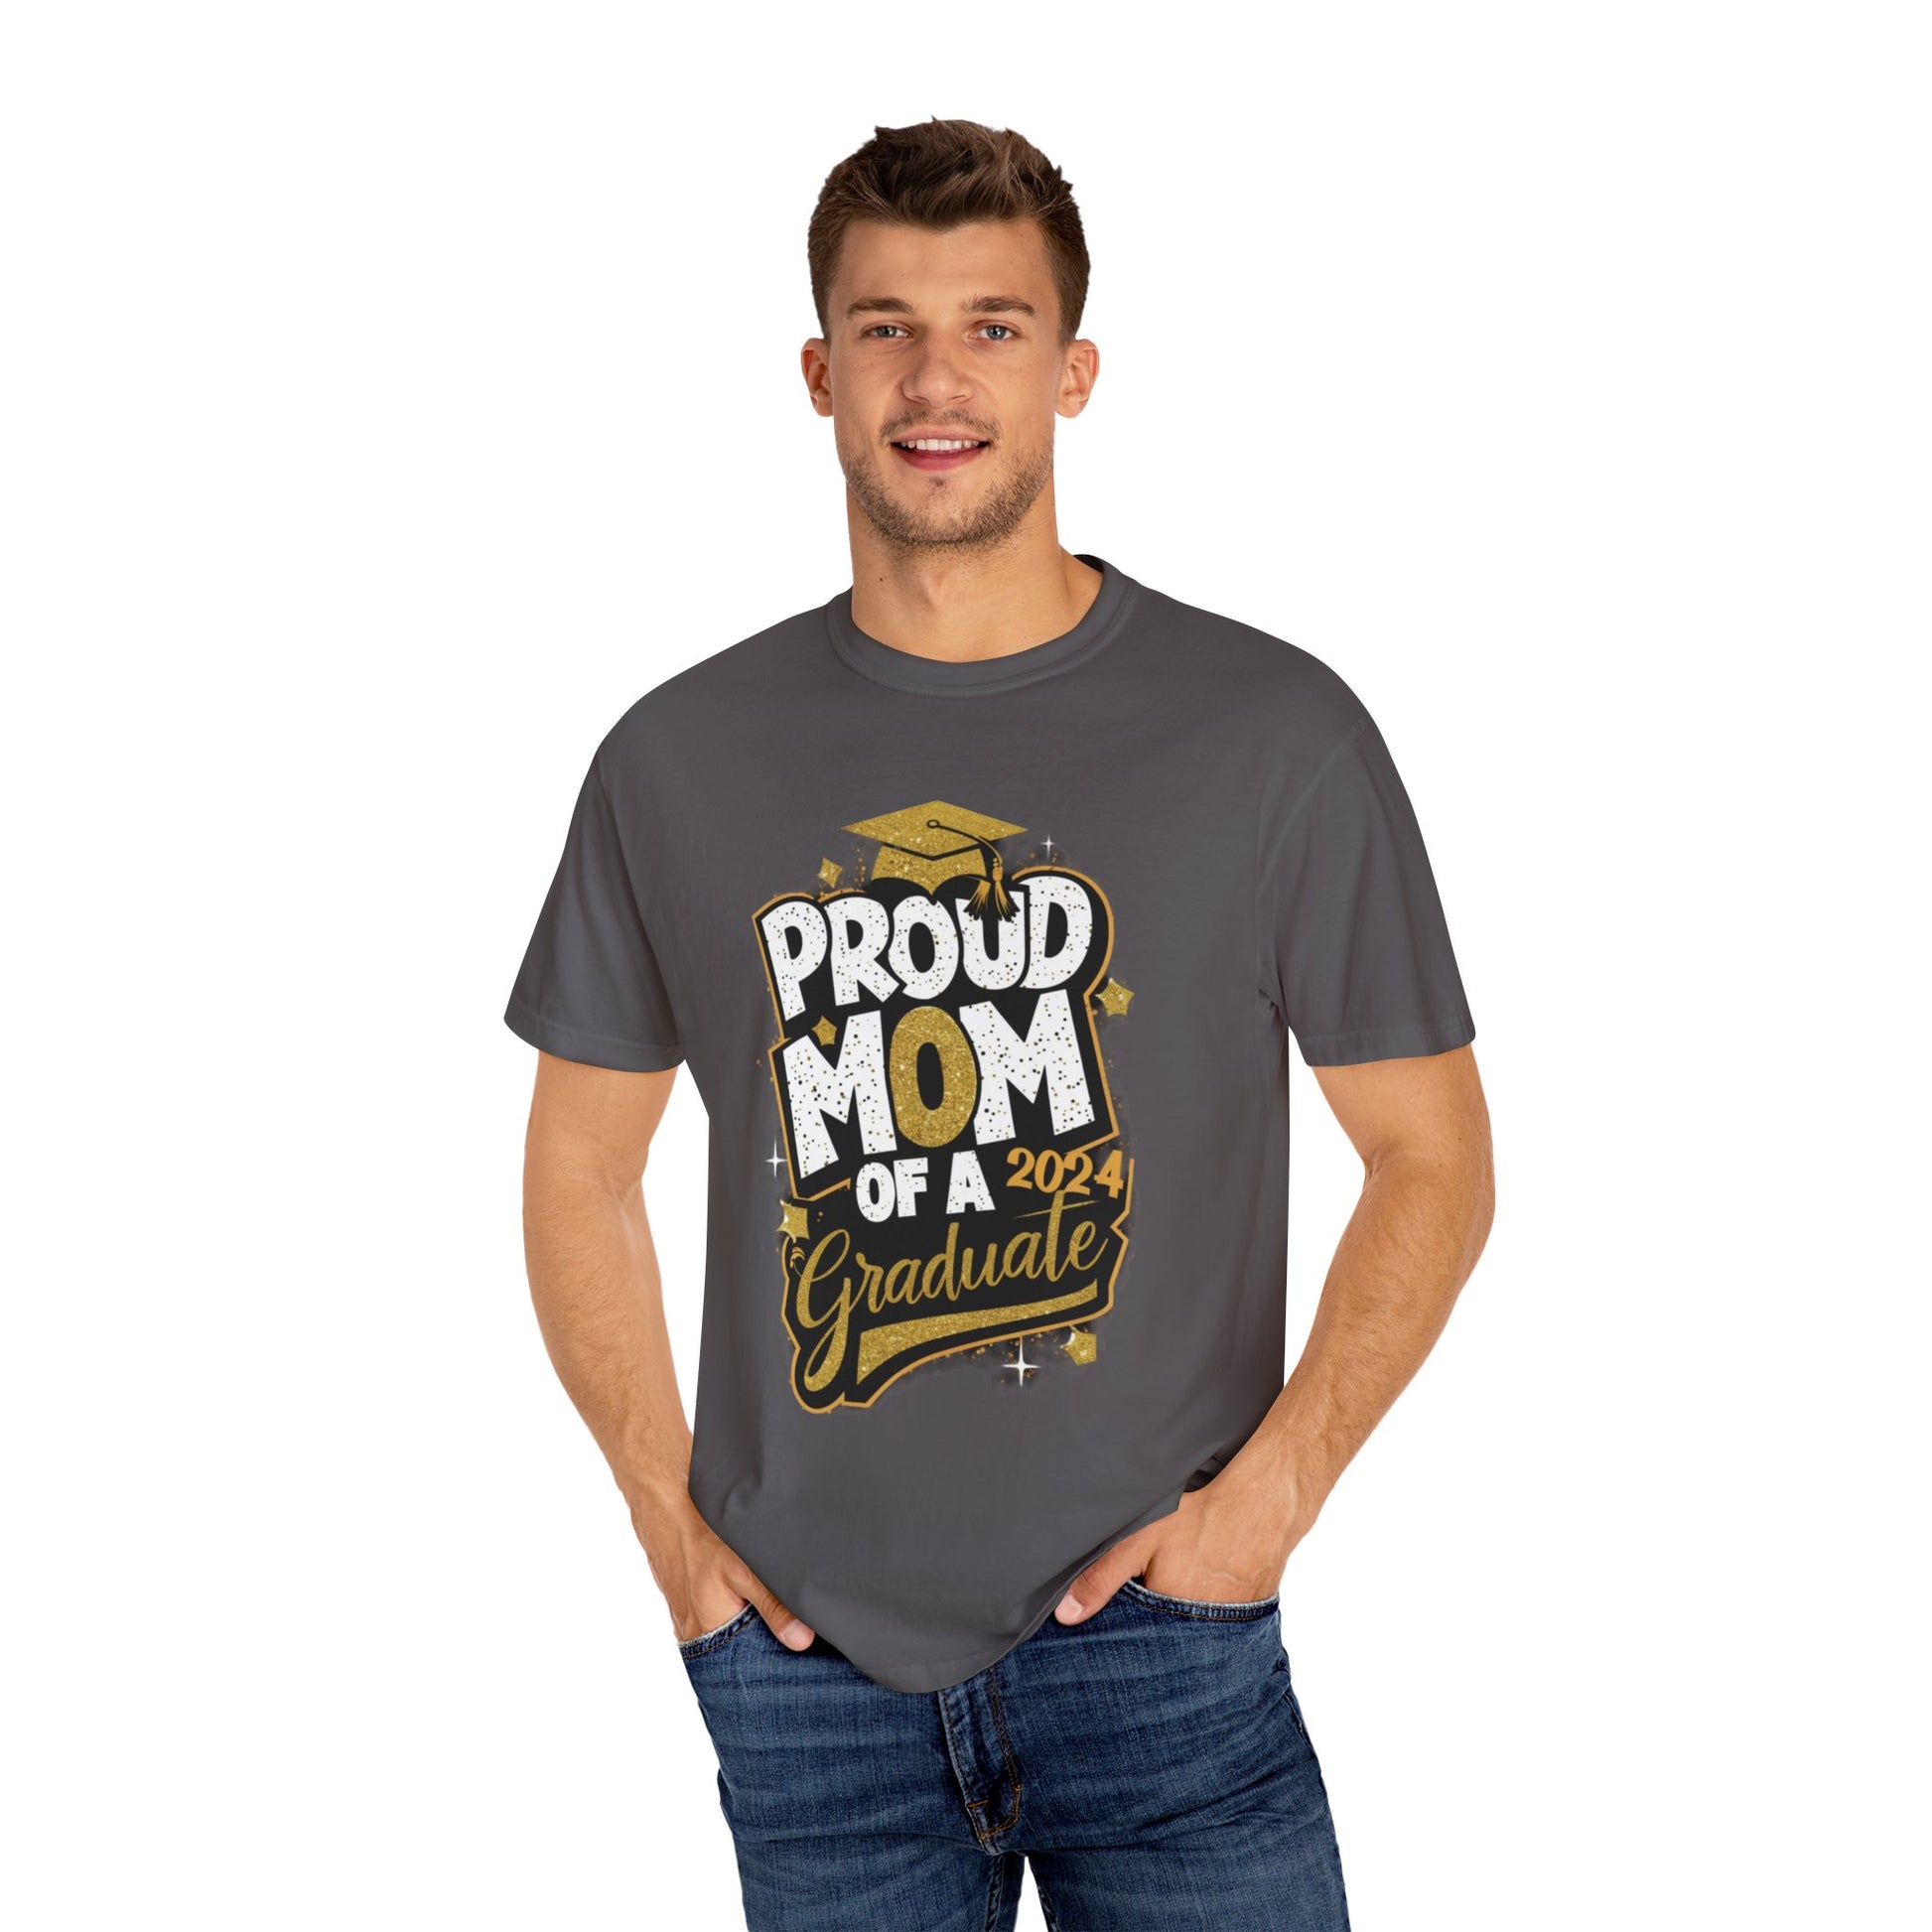 Proud Mom of a 2024 Graduate Unisex Garment-dyed T-shirt Cotton Funny Humorous Graphic Soft Premium Unisex Men Women Graphite T-shirt Birthday Gift-39